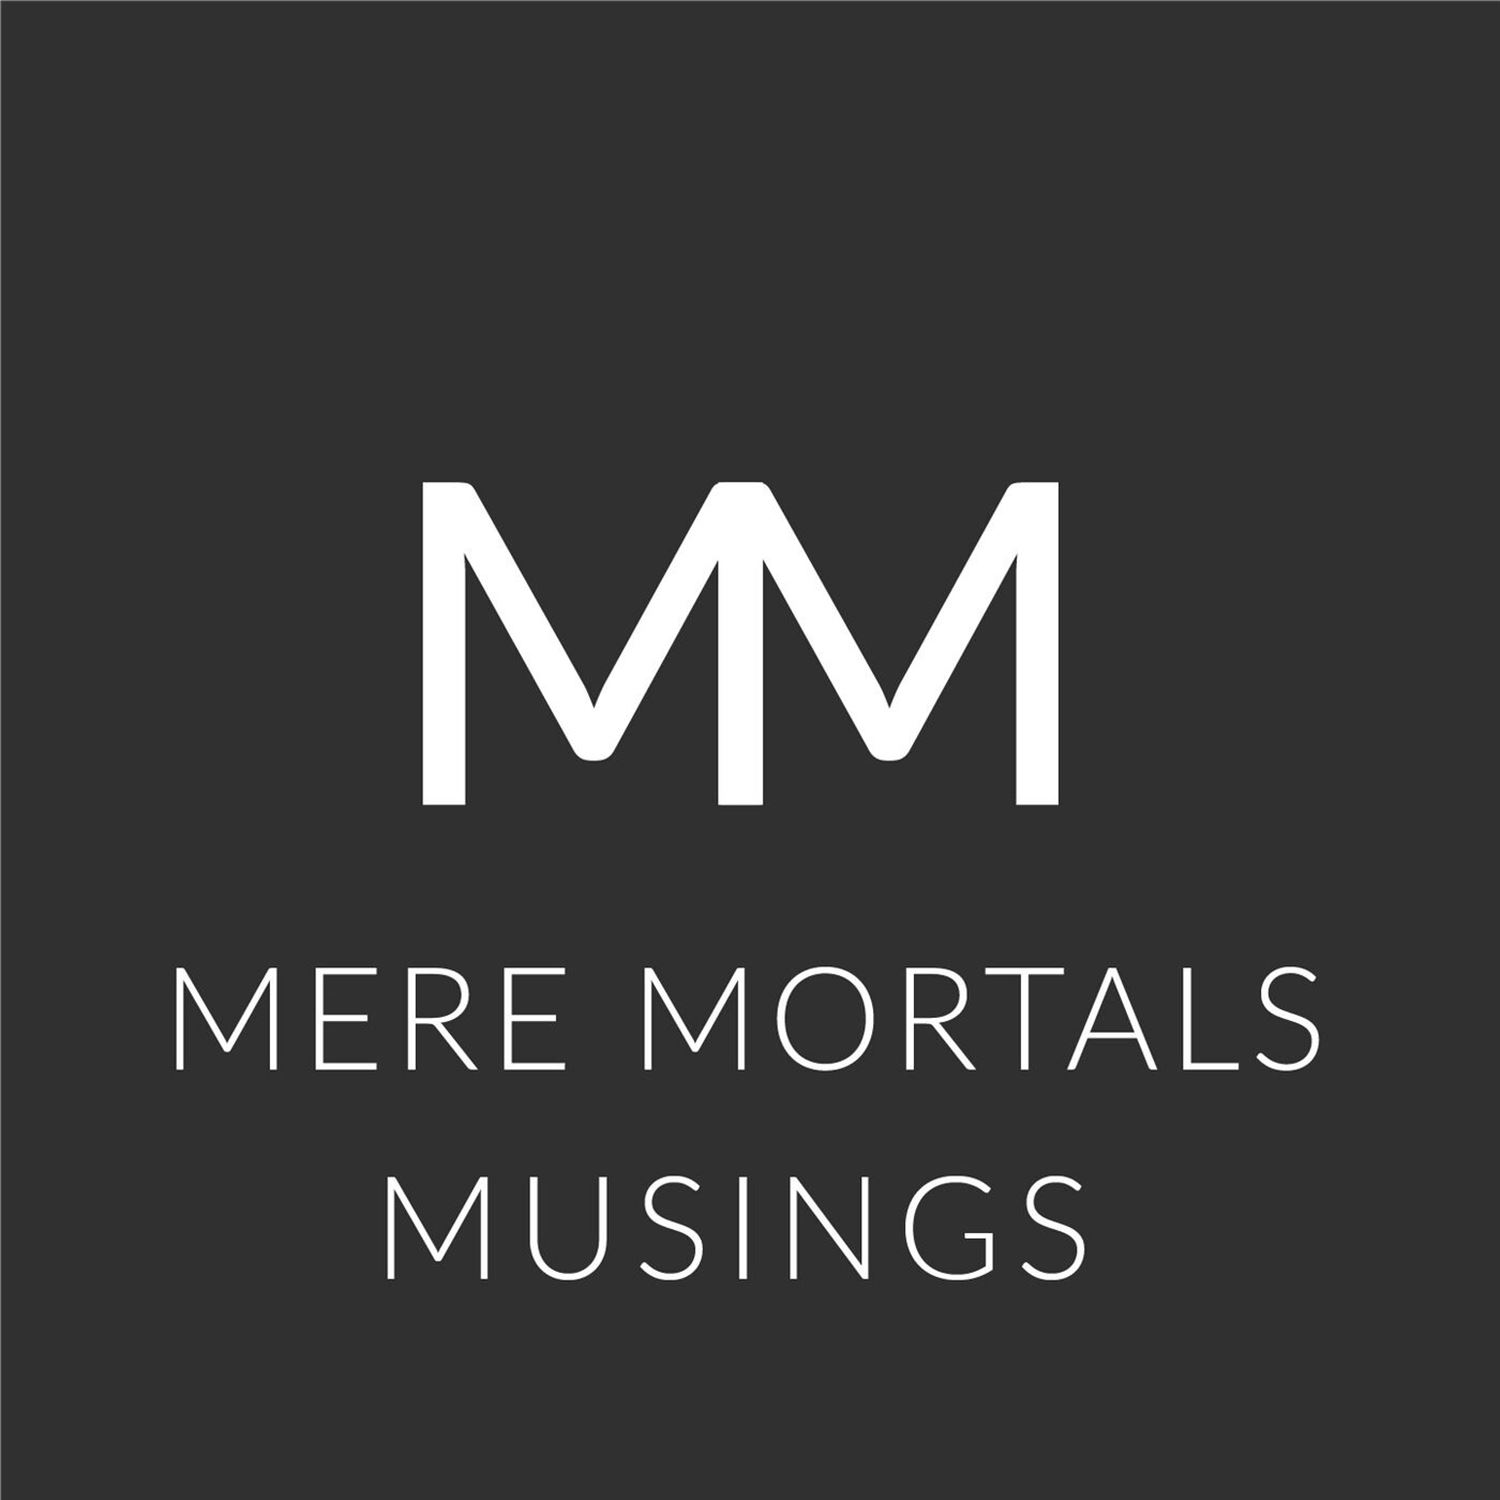 Trust Vs Vulnerability (Mere Mortals Episode #75 - Musings)